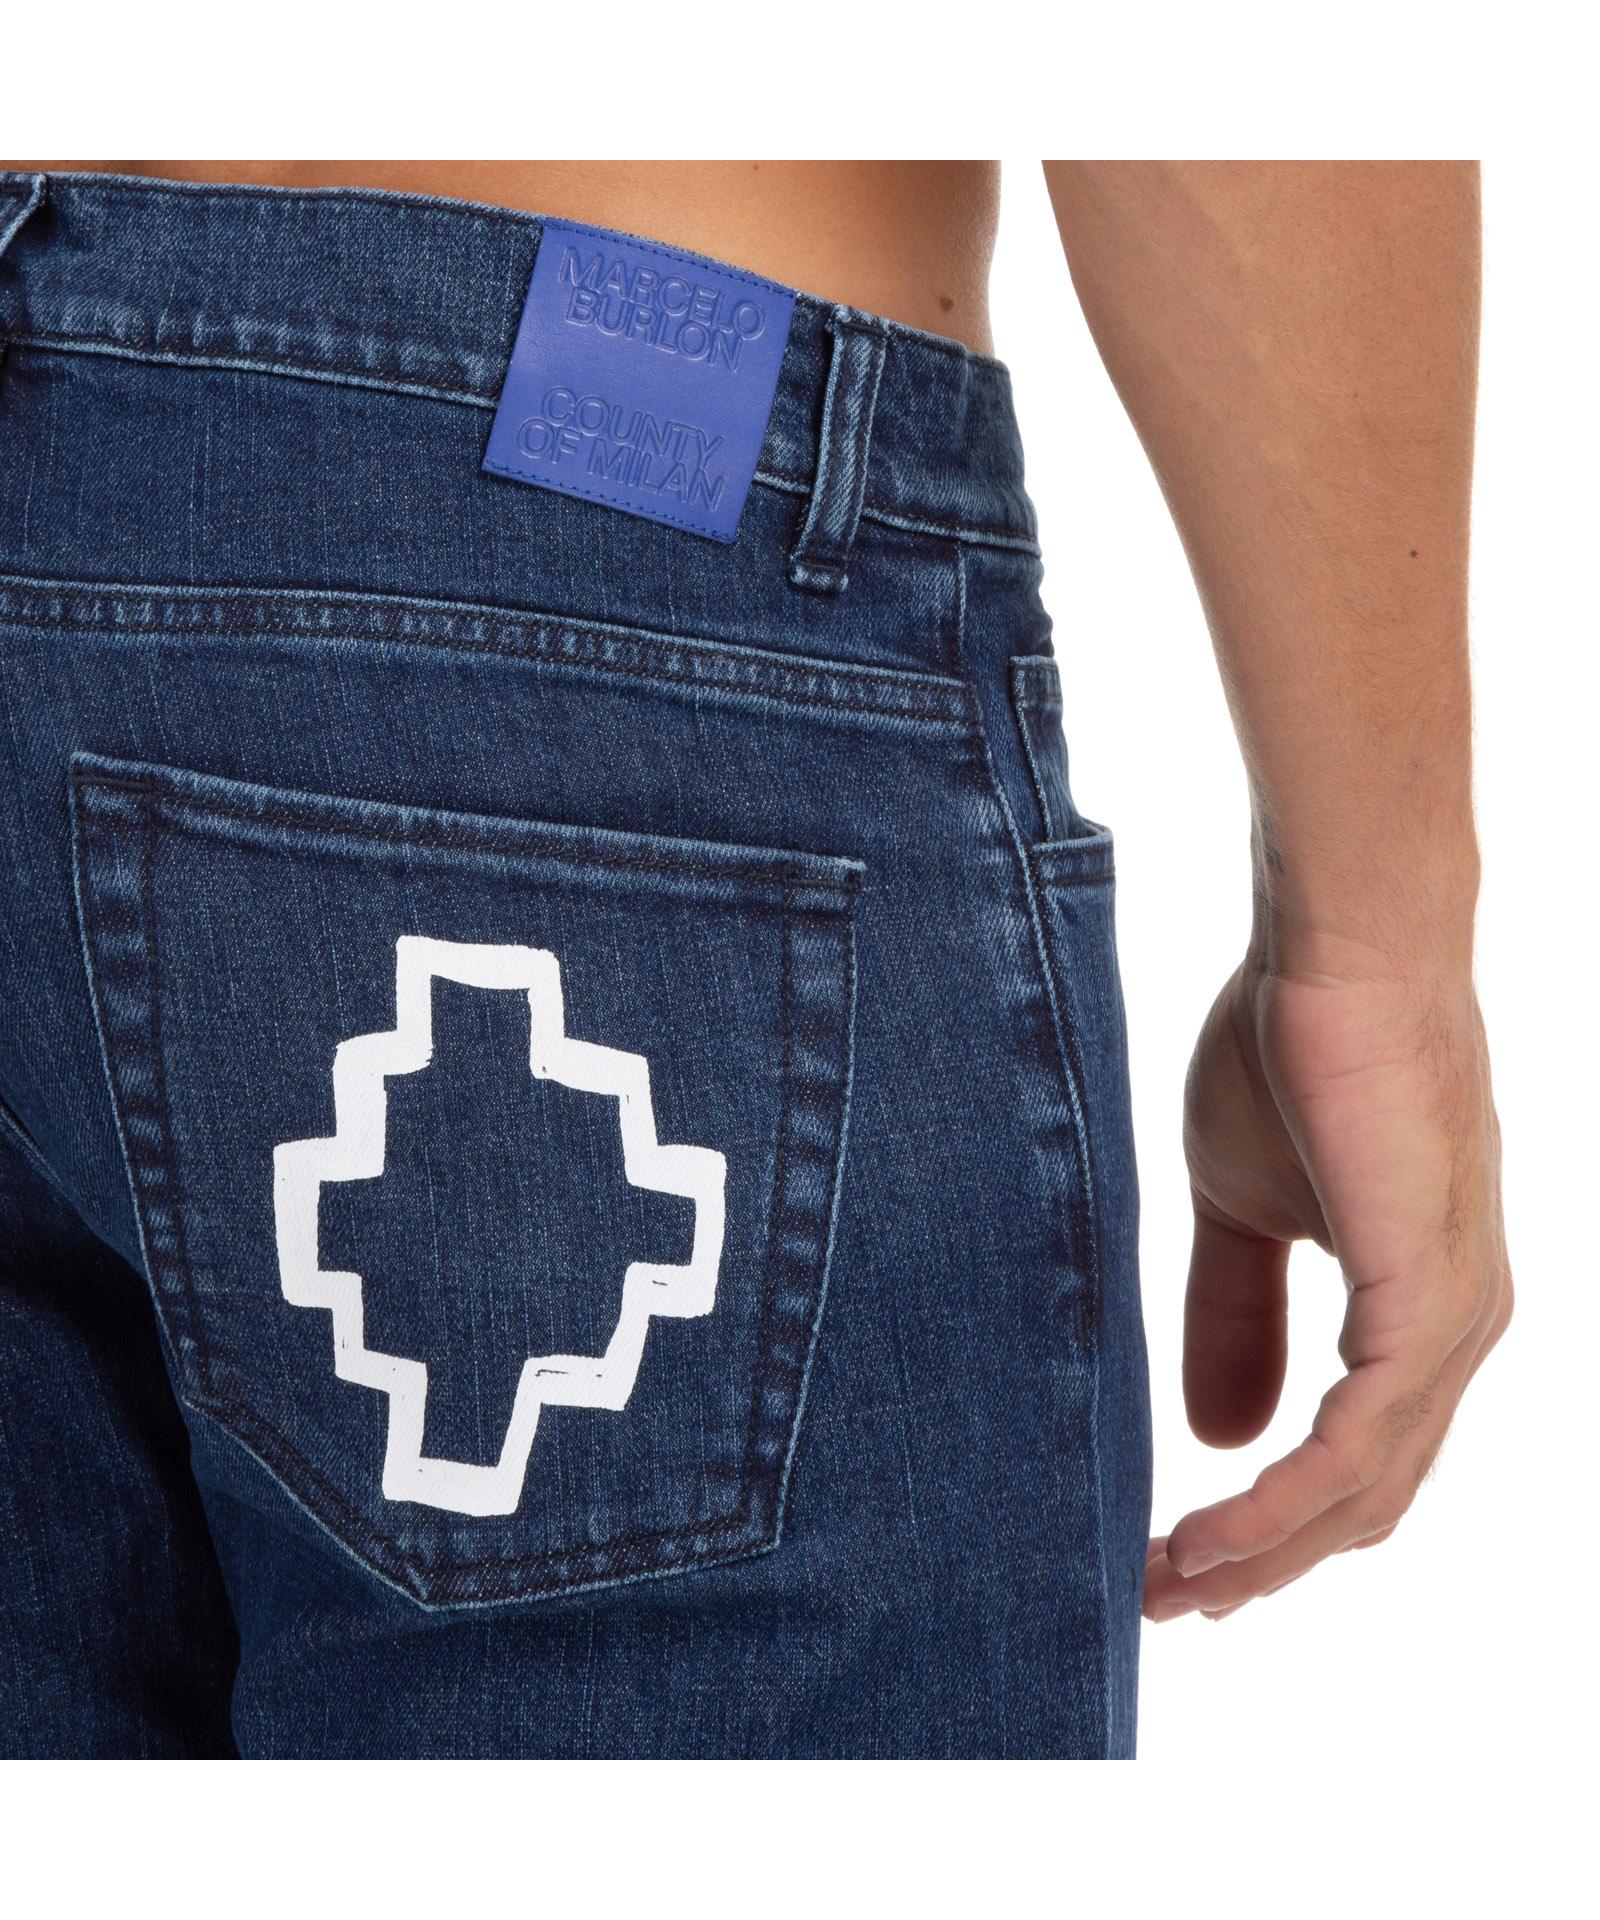 Marcelo Burlon Denim Cross Jeans in Blue for Men - Save 52% | Lyst